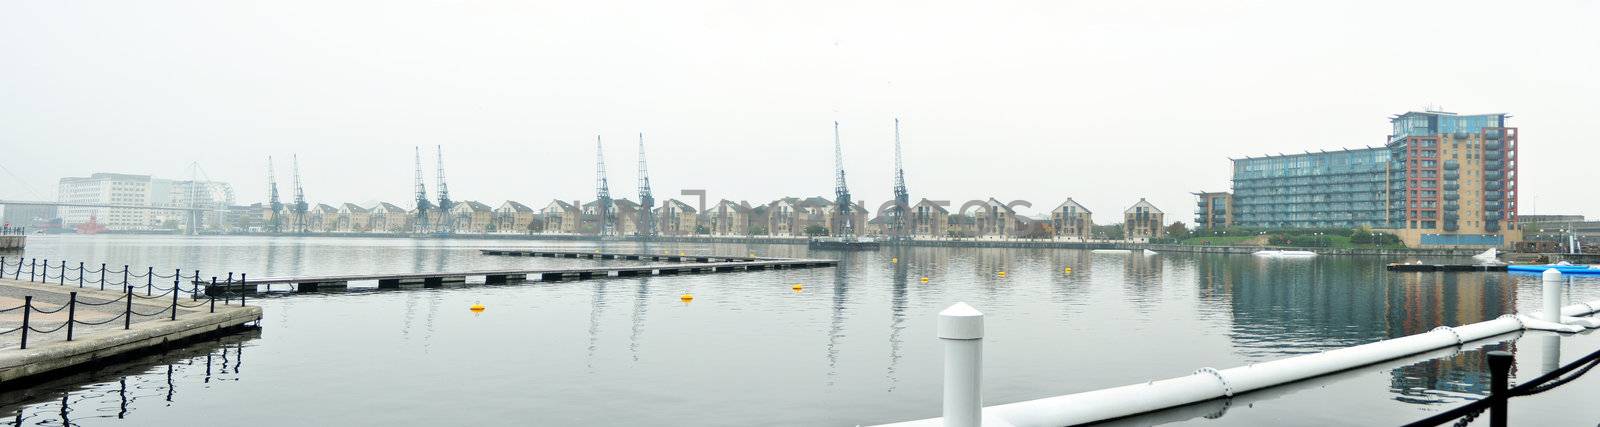 Royal Victoria Dock London England large panorama